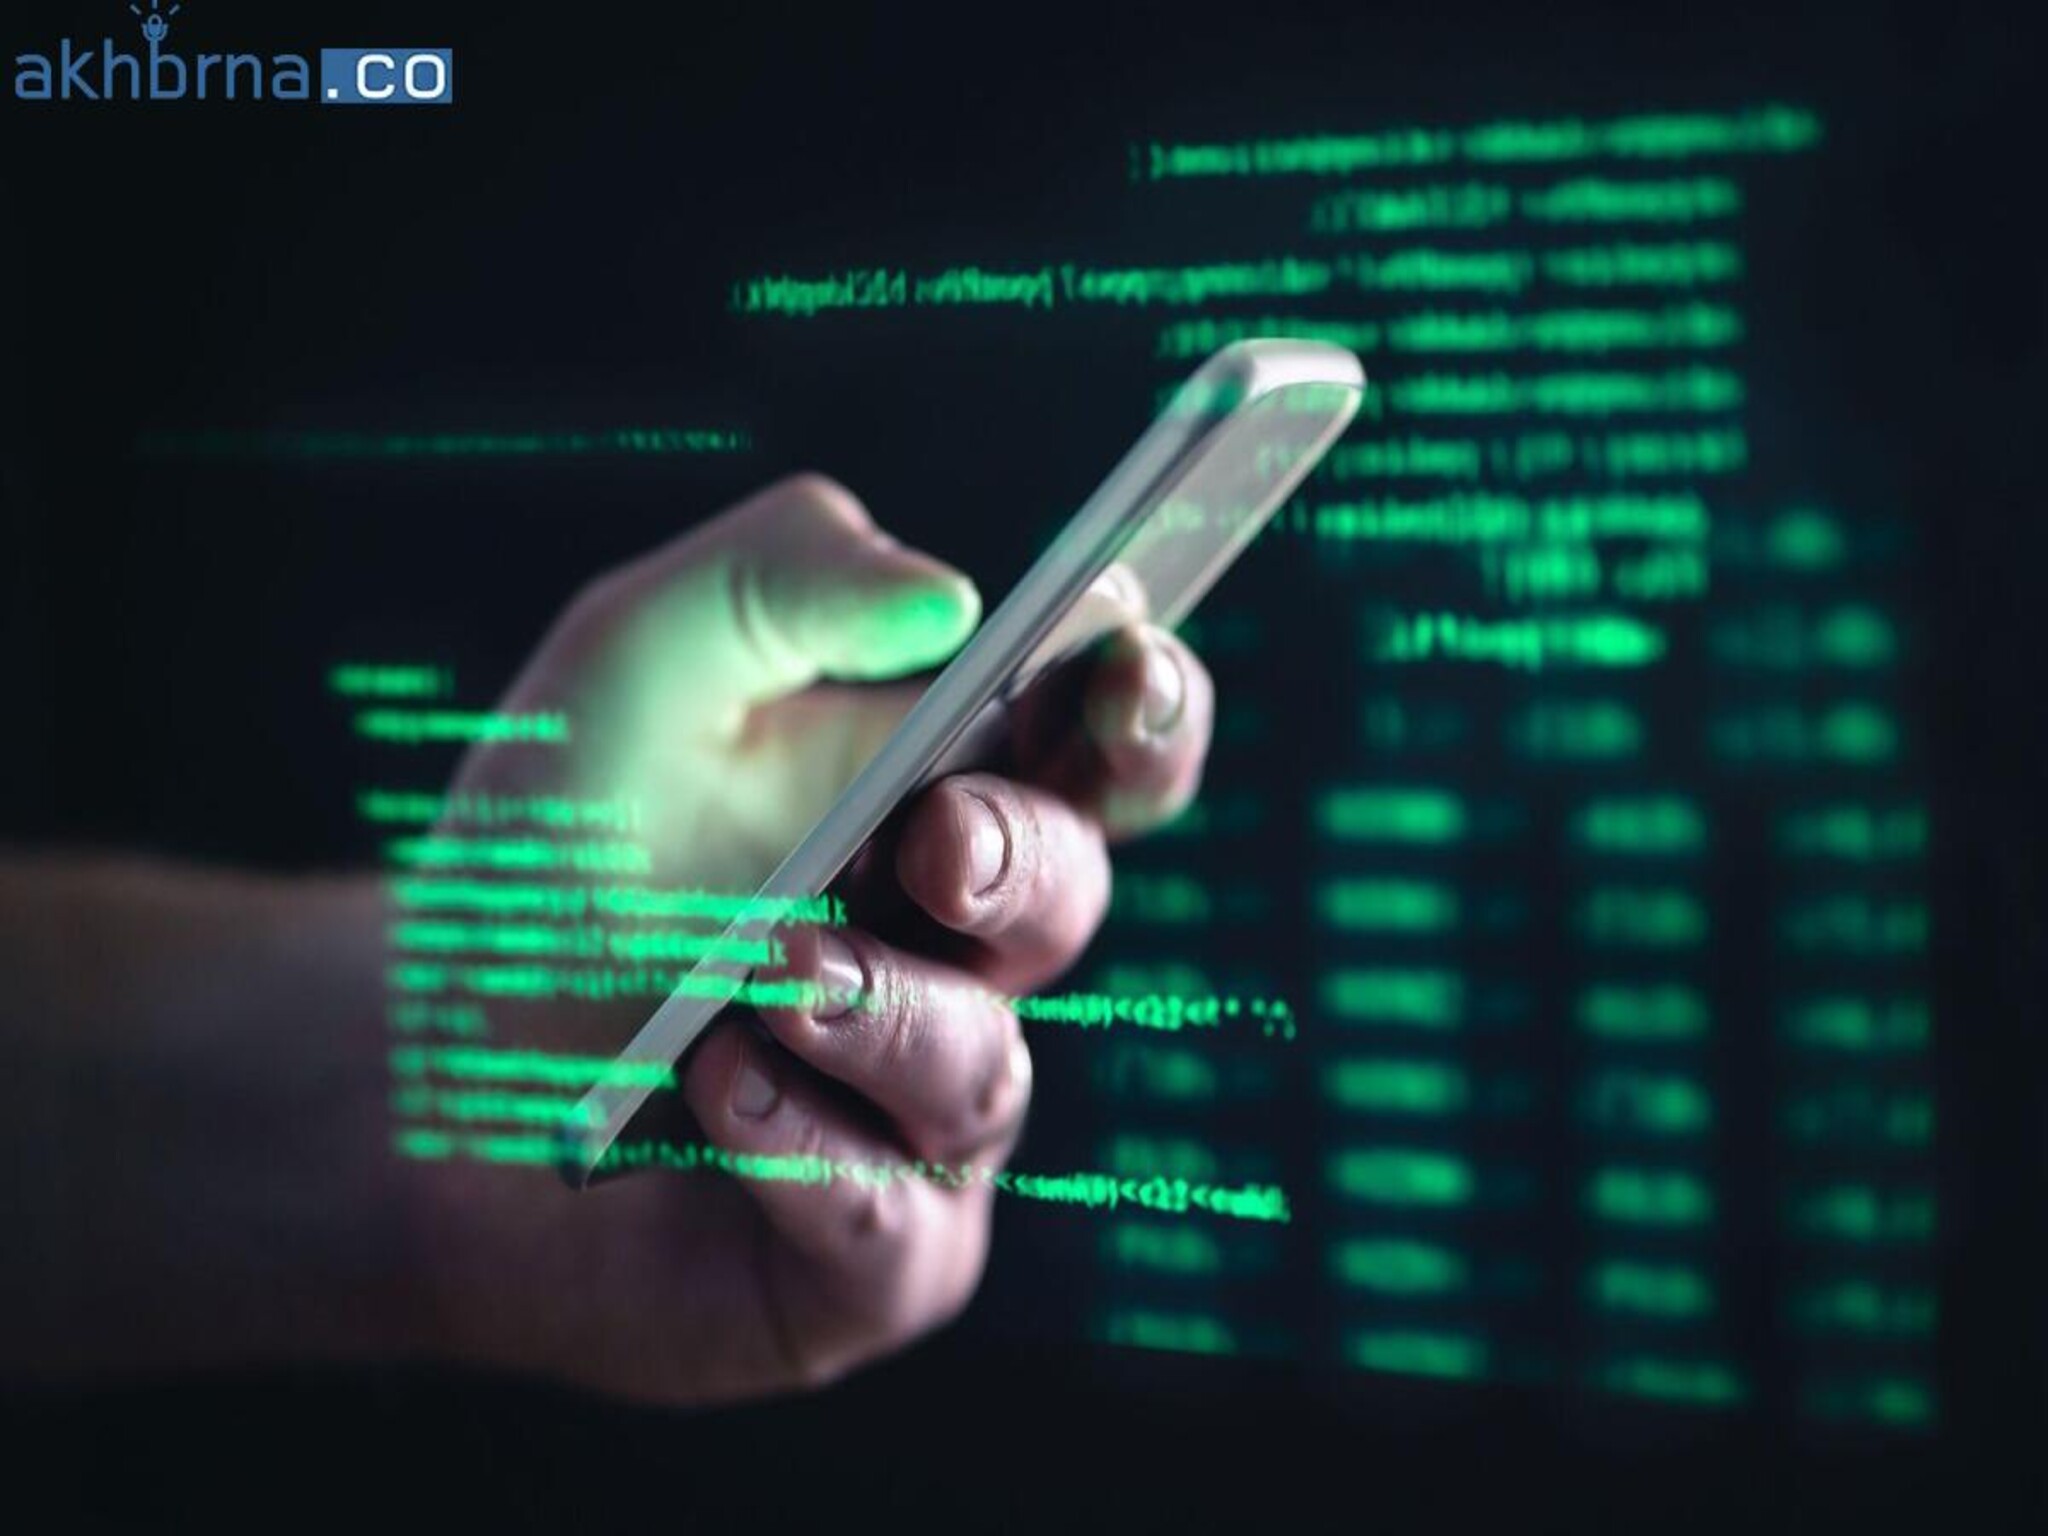 UAE government cautions against hacking mobile phones